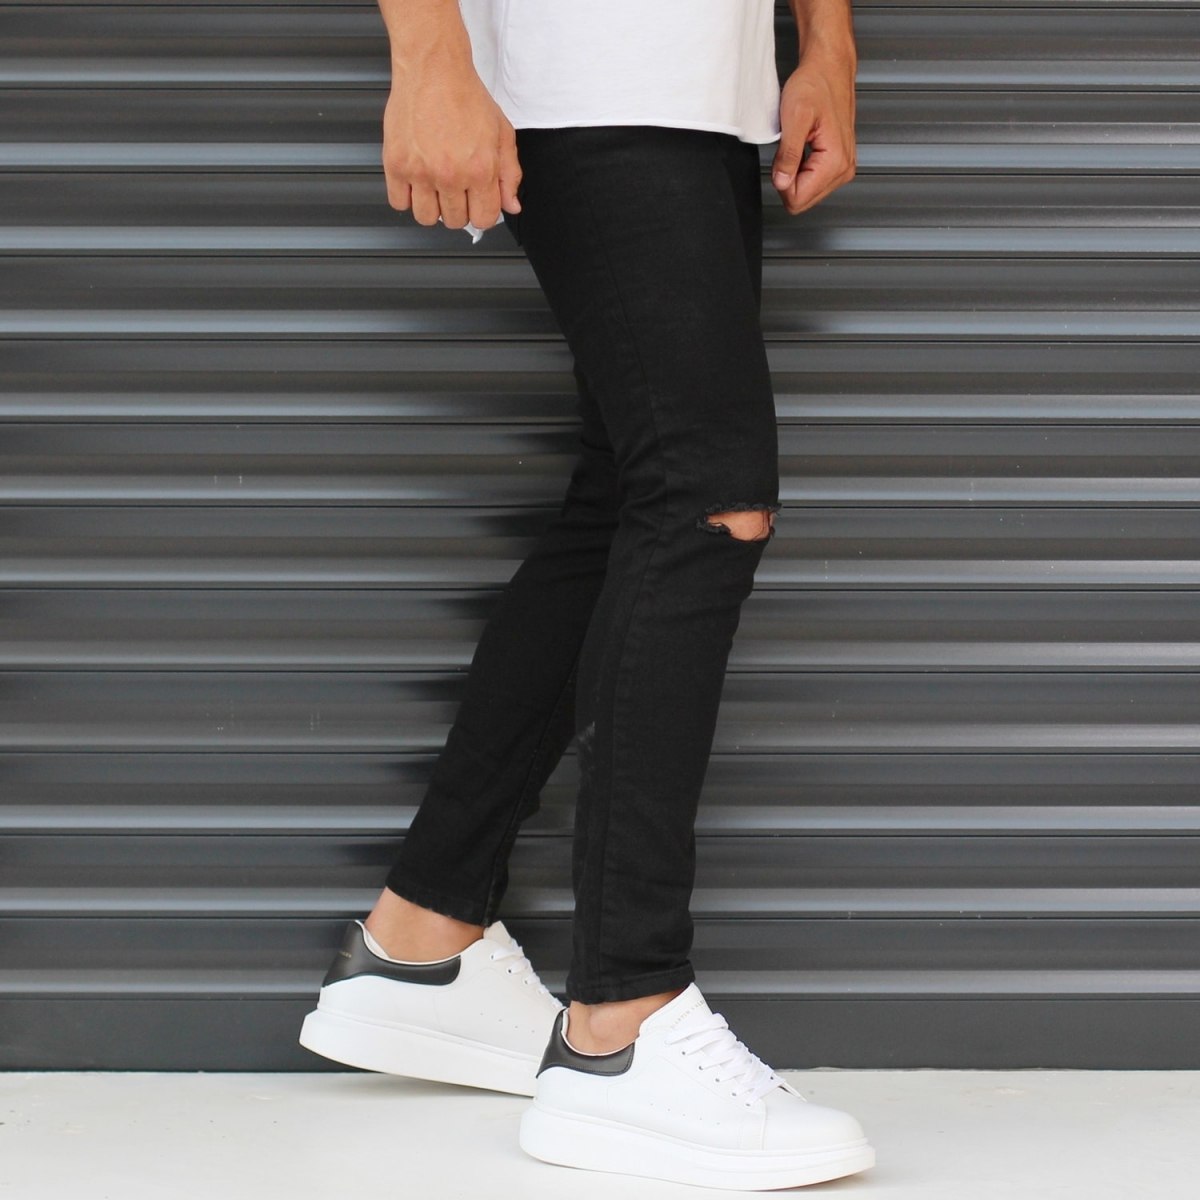 Men's Narrow Skinny Jeans With Knee Rips In Black